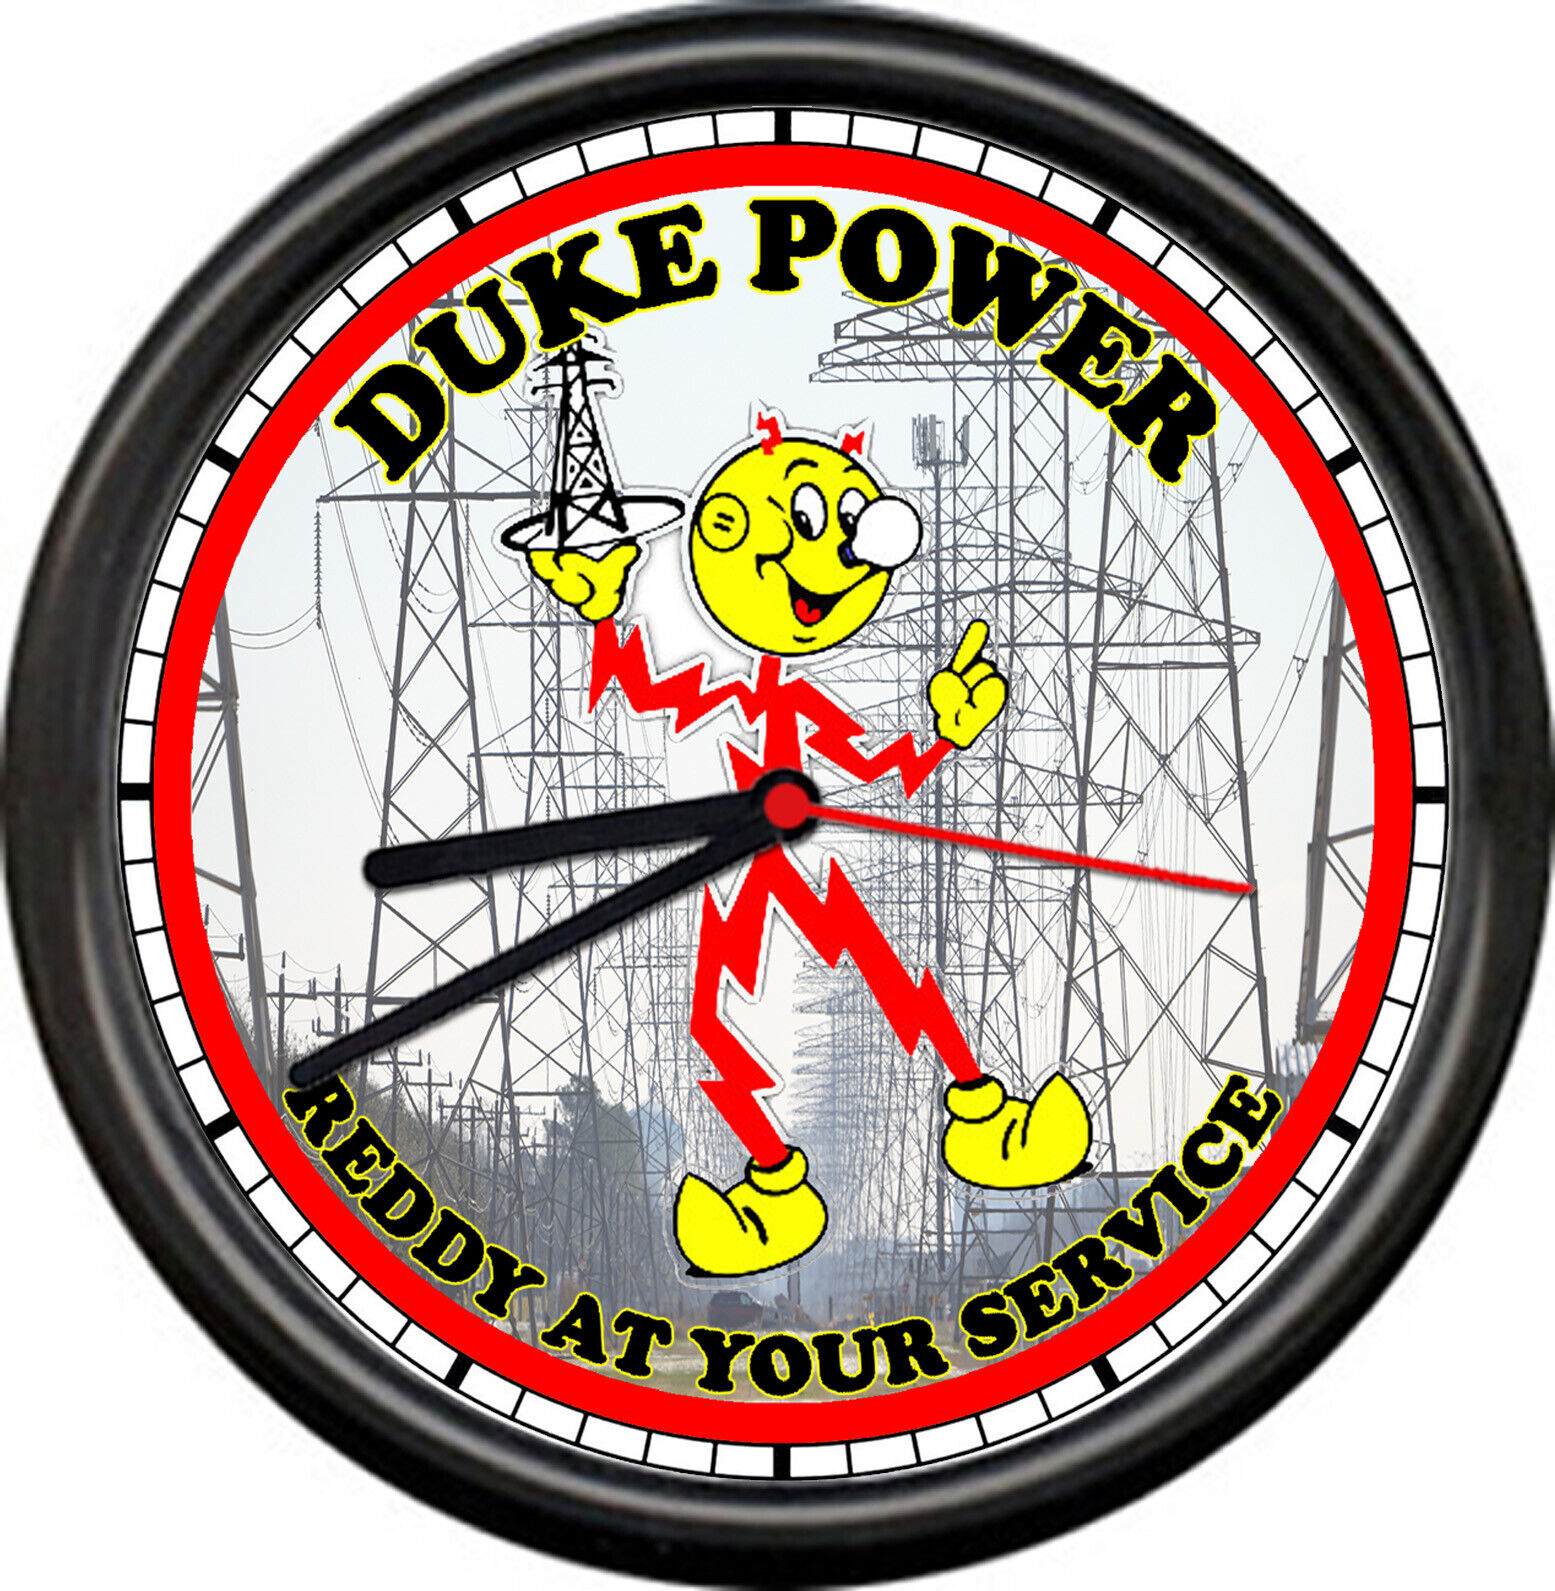 Reddy Kilowatt Electrician Utility Duke Electric Power Sign Wall Clock